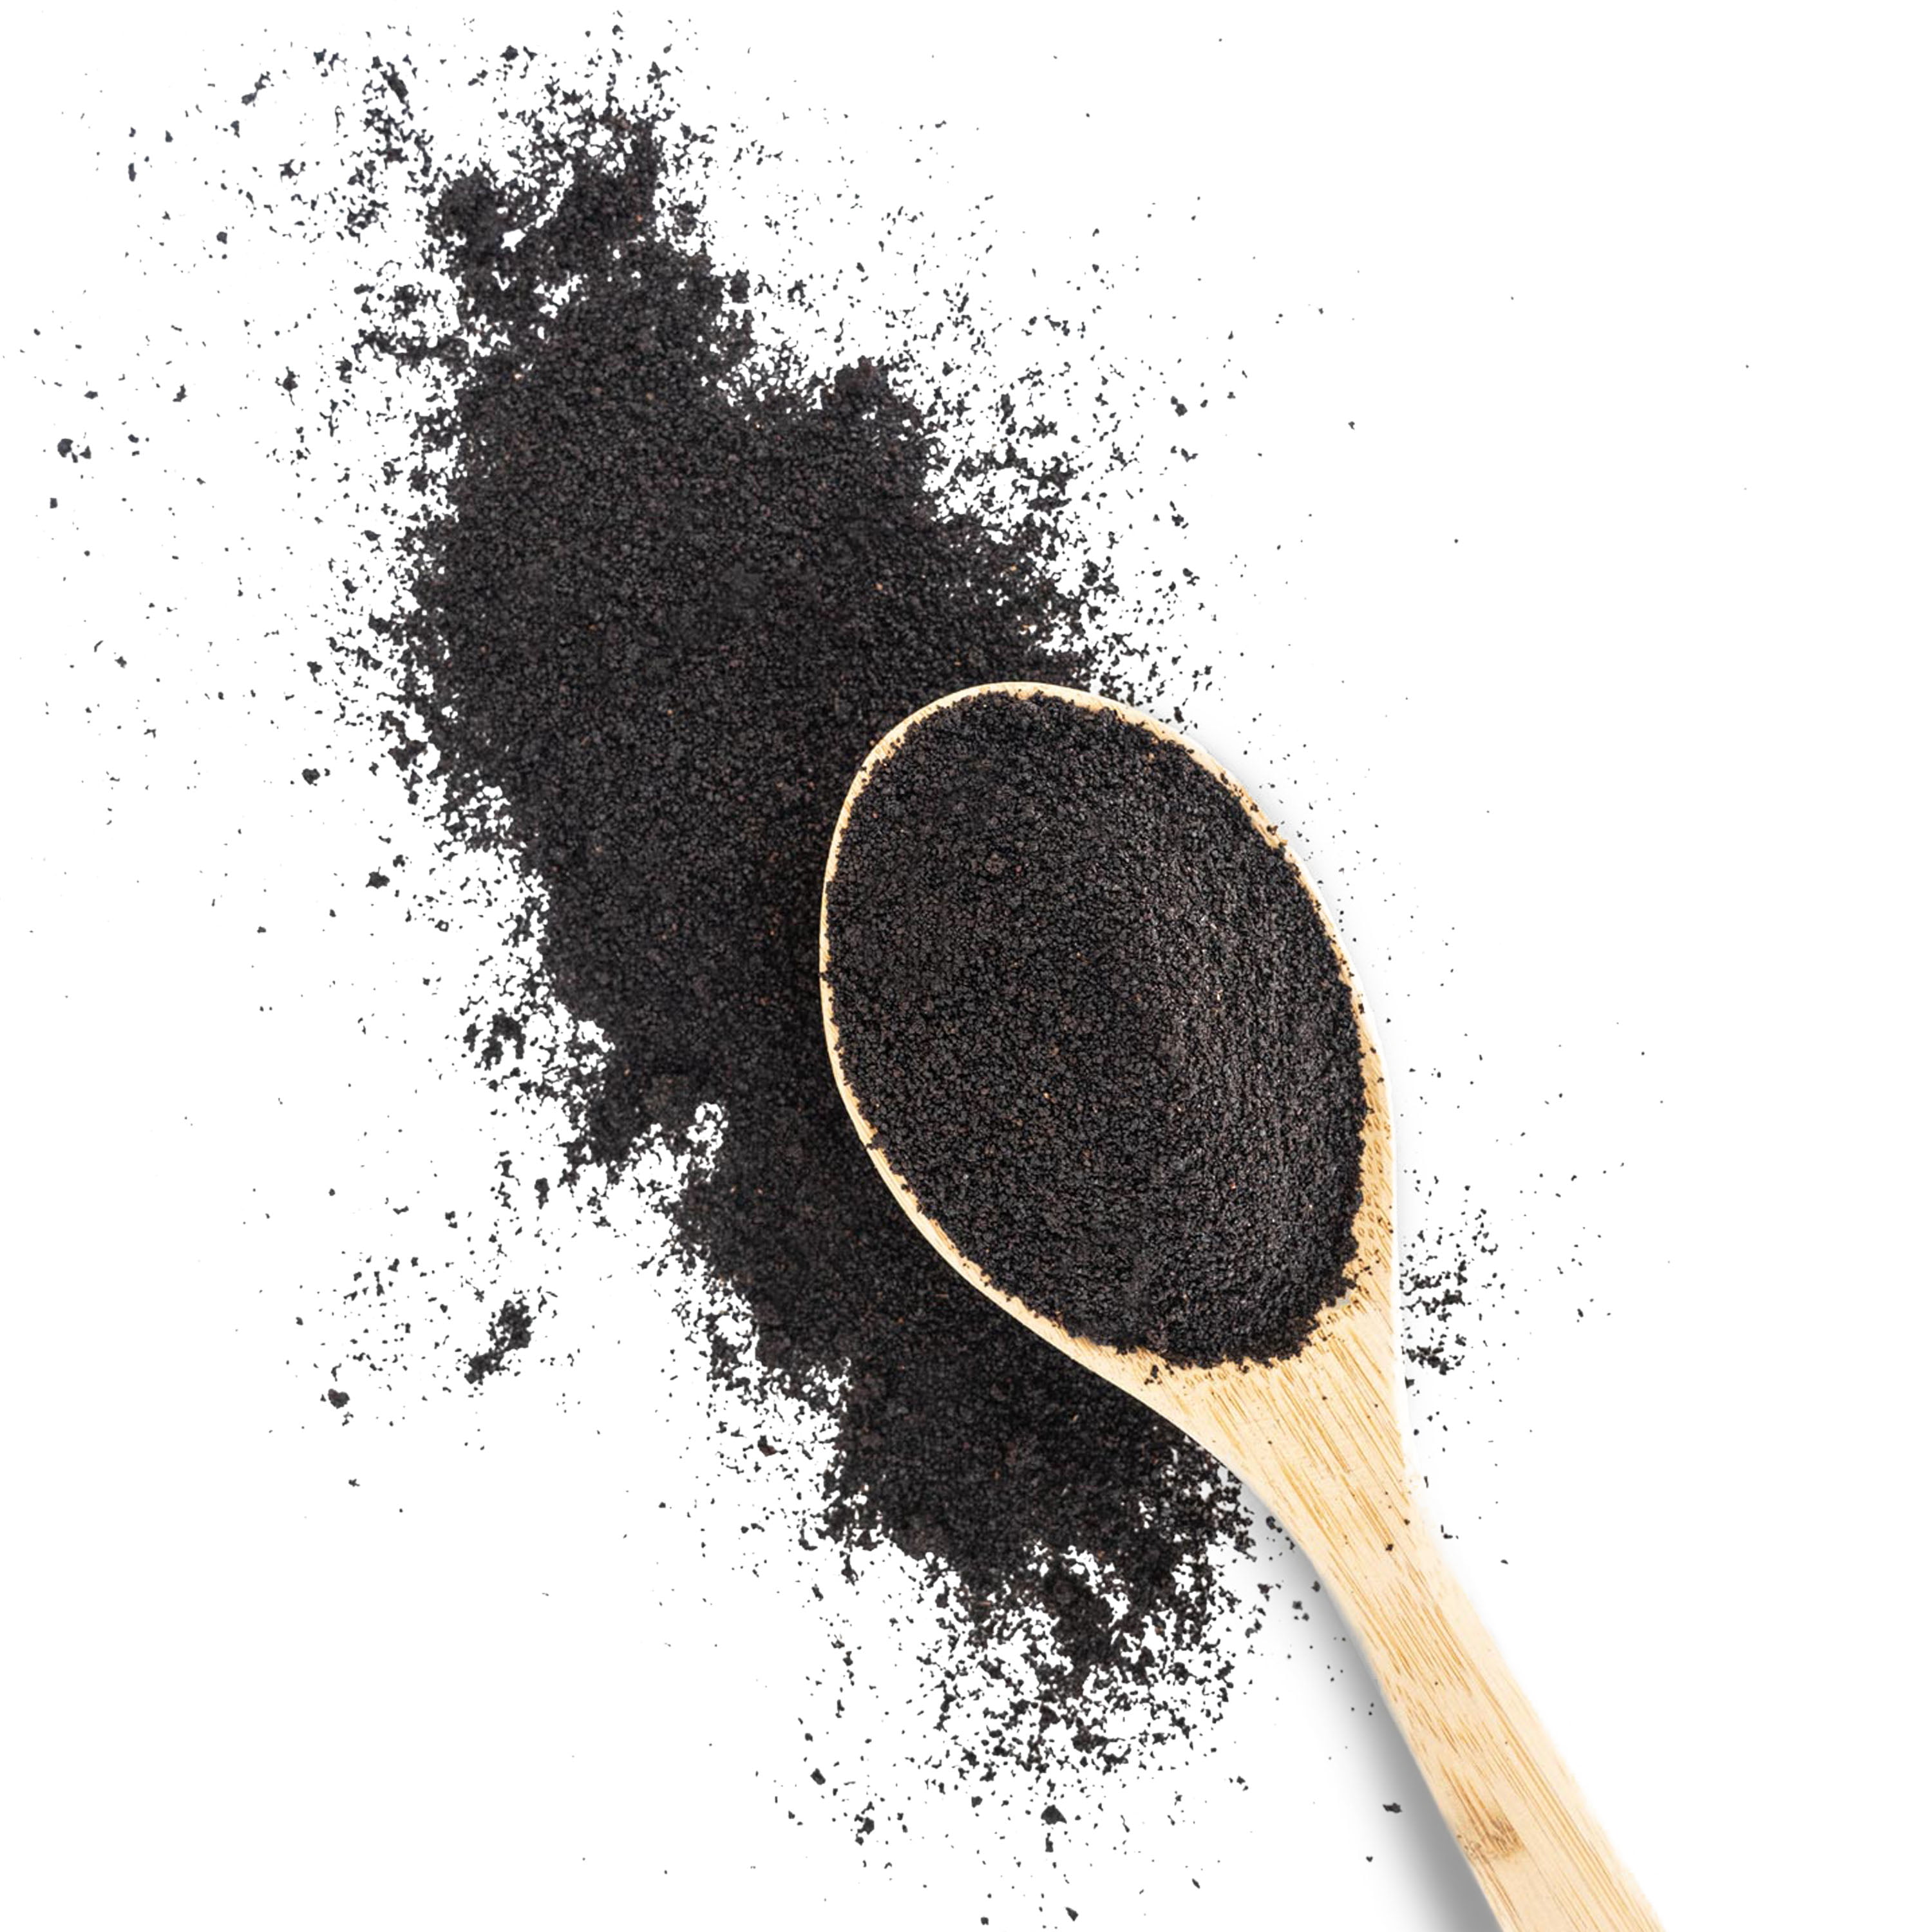 Black Garlic Powder – 8 oz Shaker